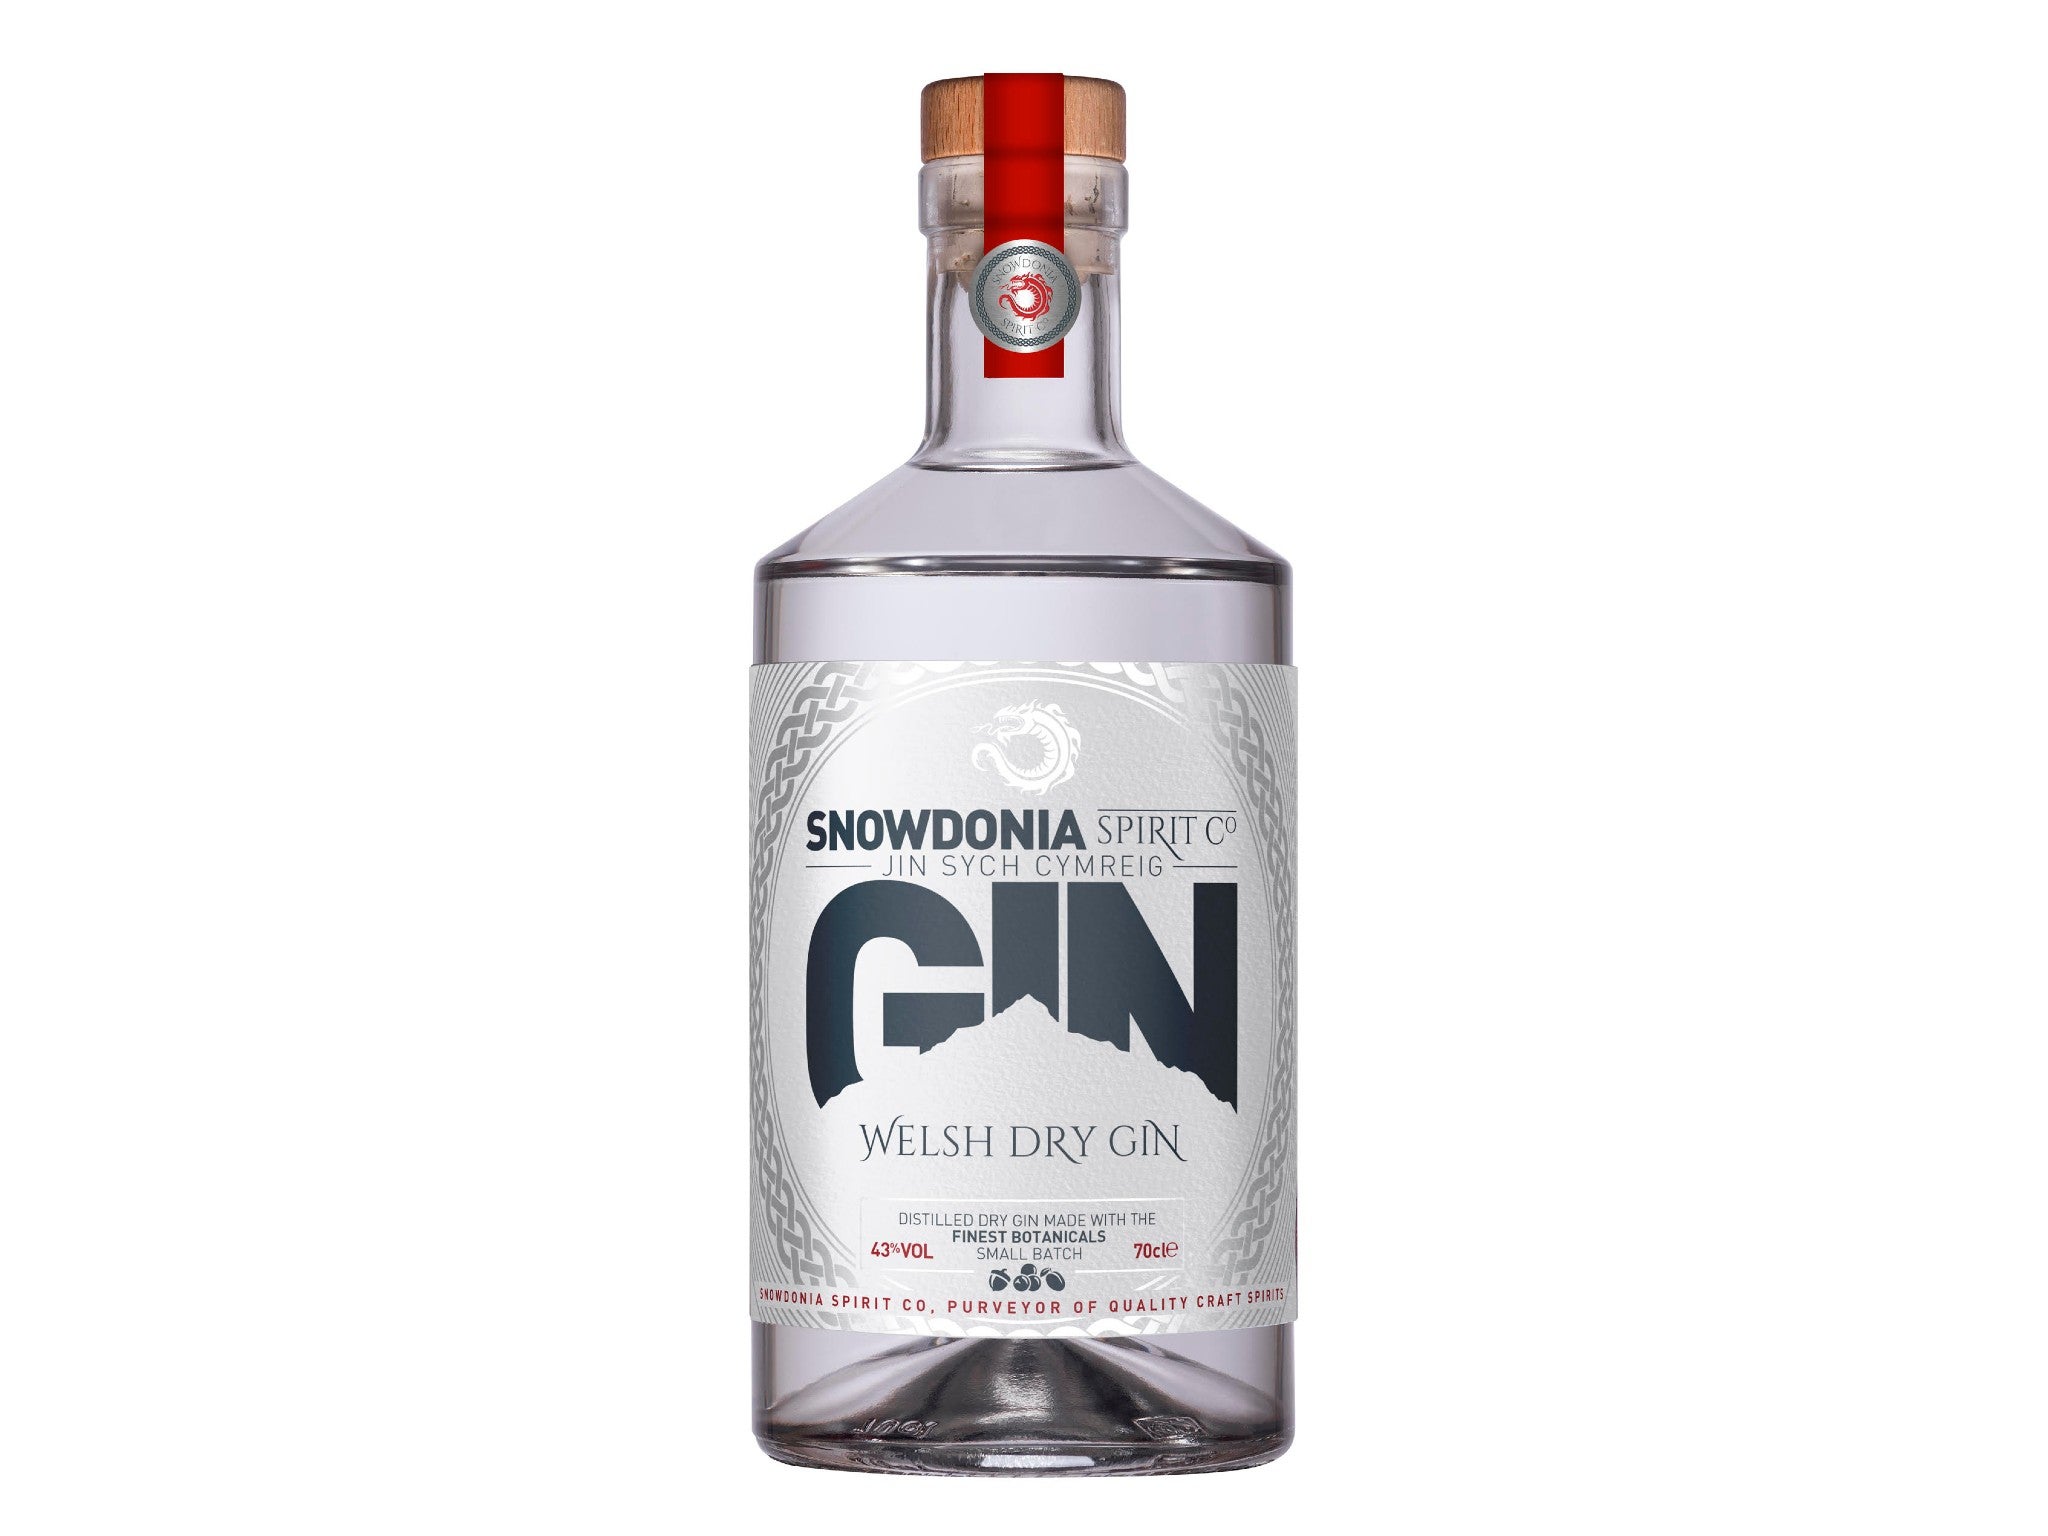 Snowdonia Spirit Co Welsh dry gin, 70cl indybest.jpeg